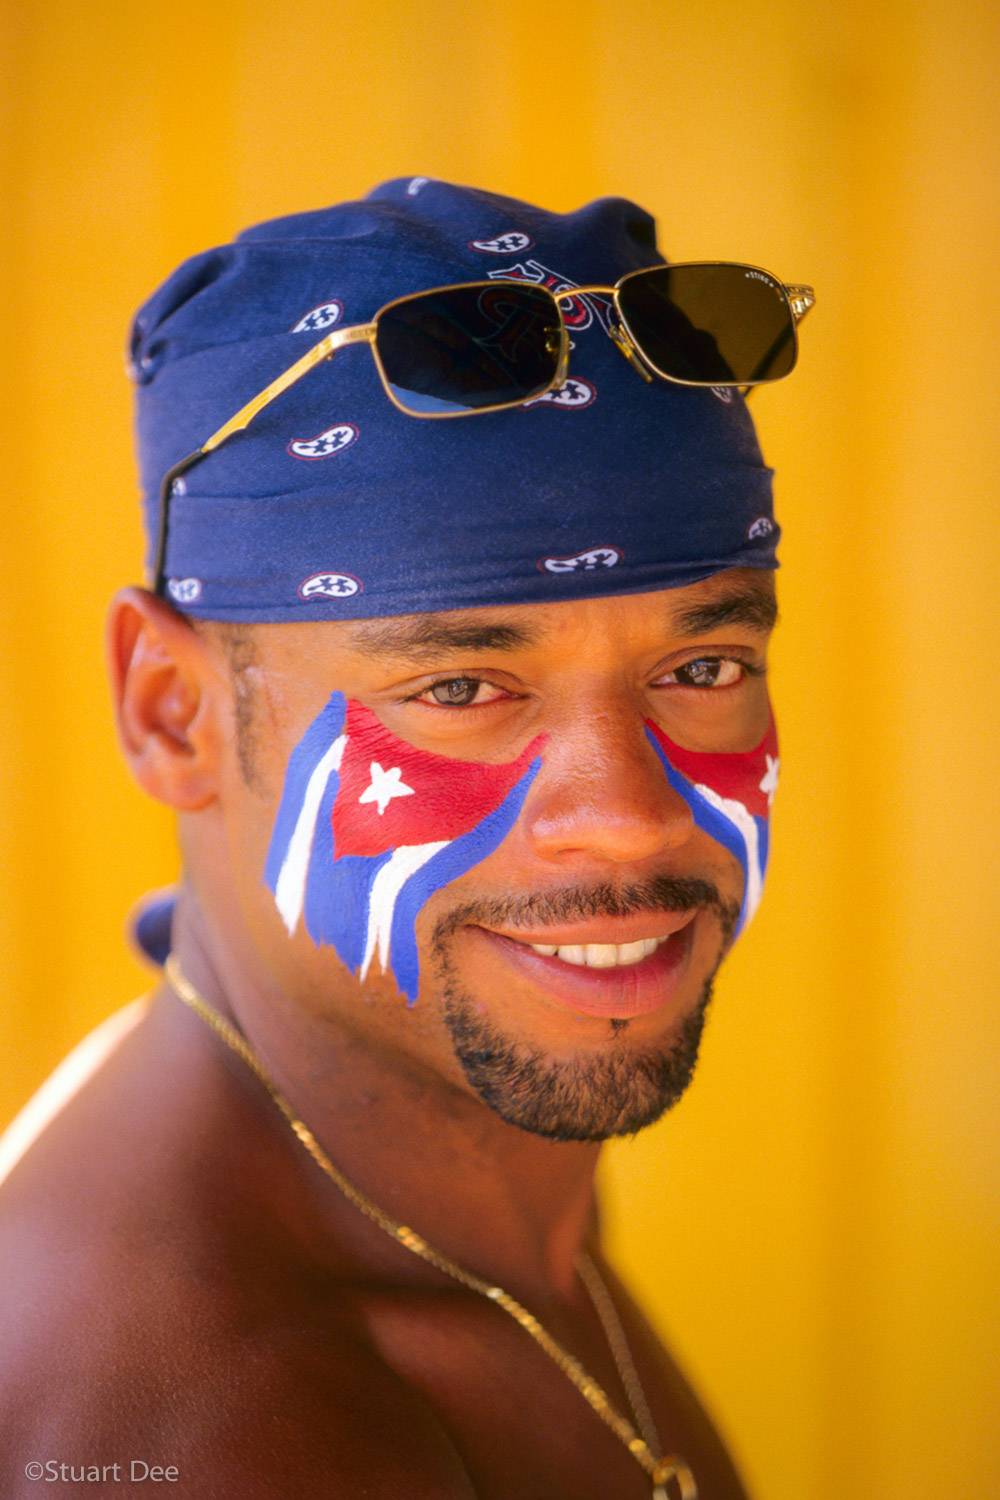  Man with Cuban flag painted on face, Varedero, Cuba 